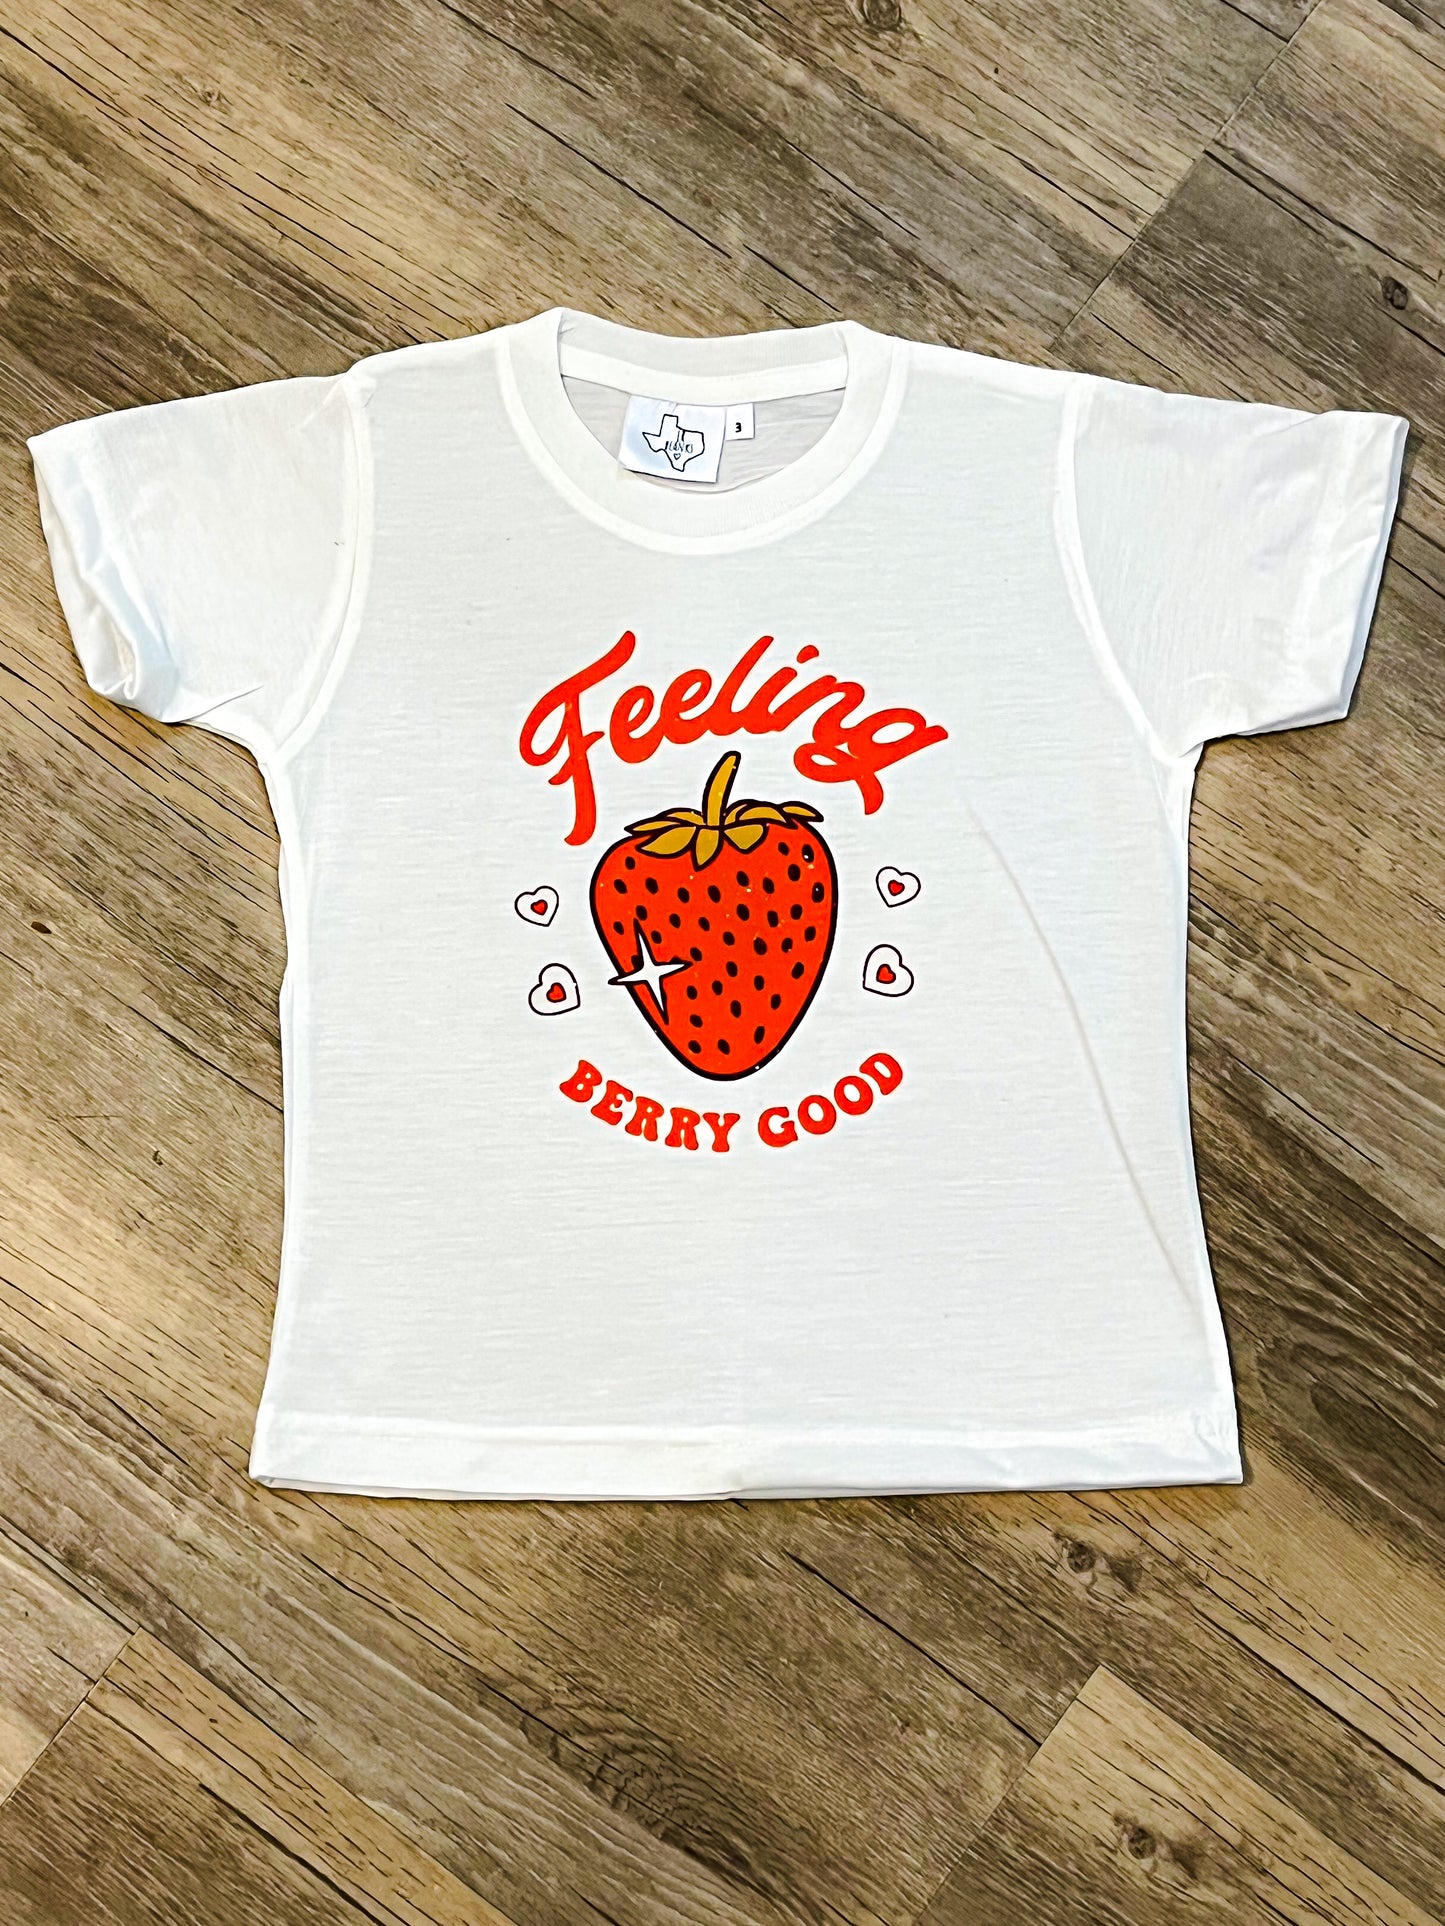 Feeling Berry Good Shirt